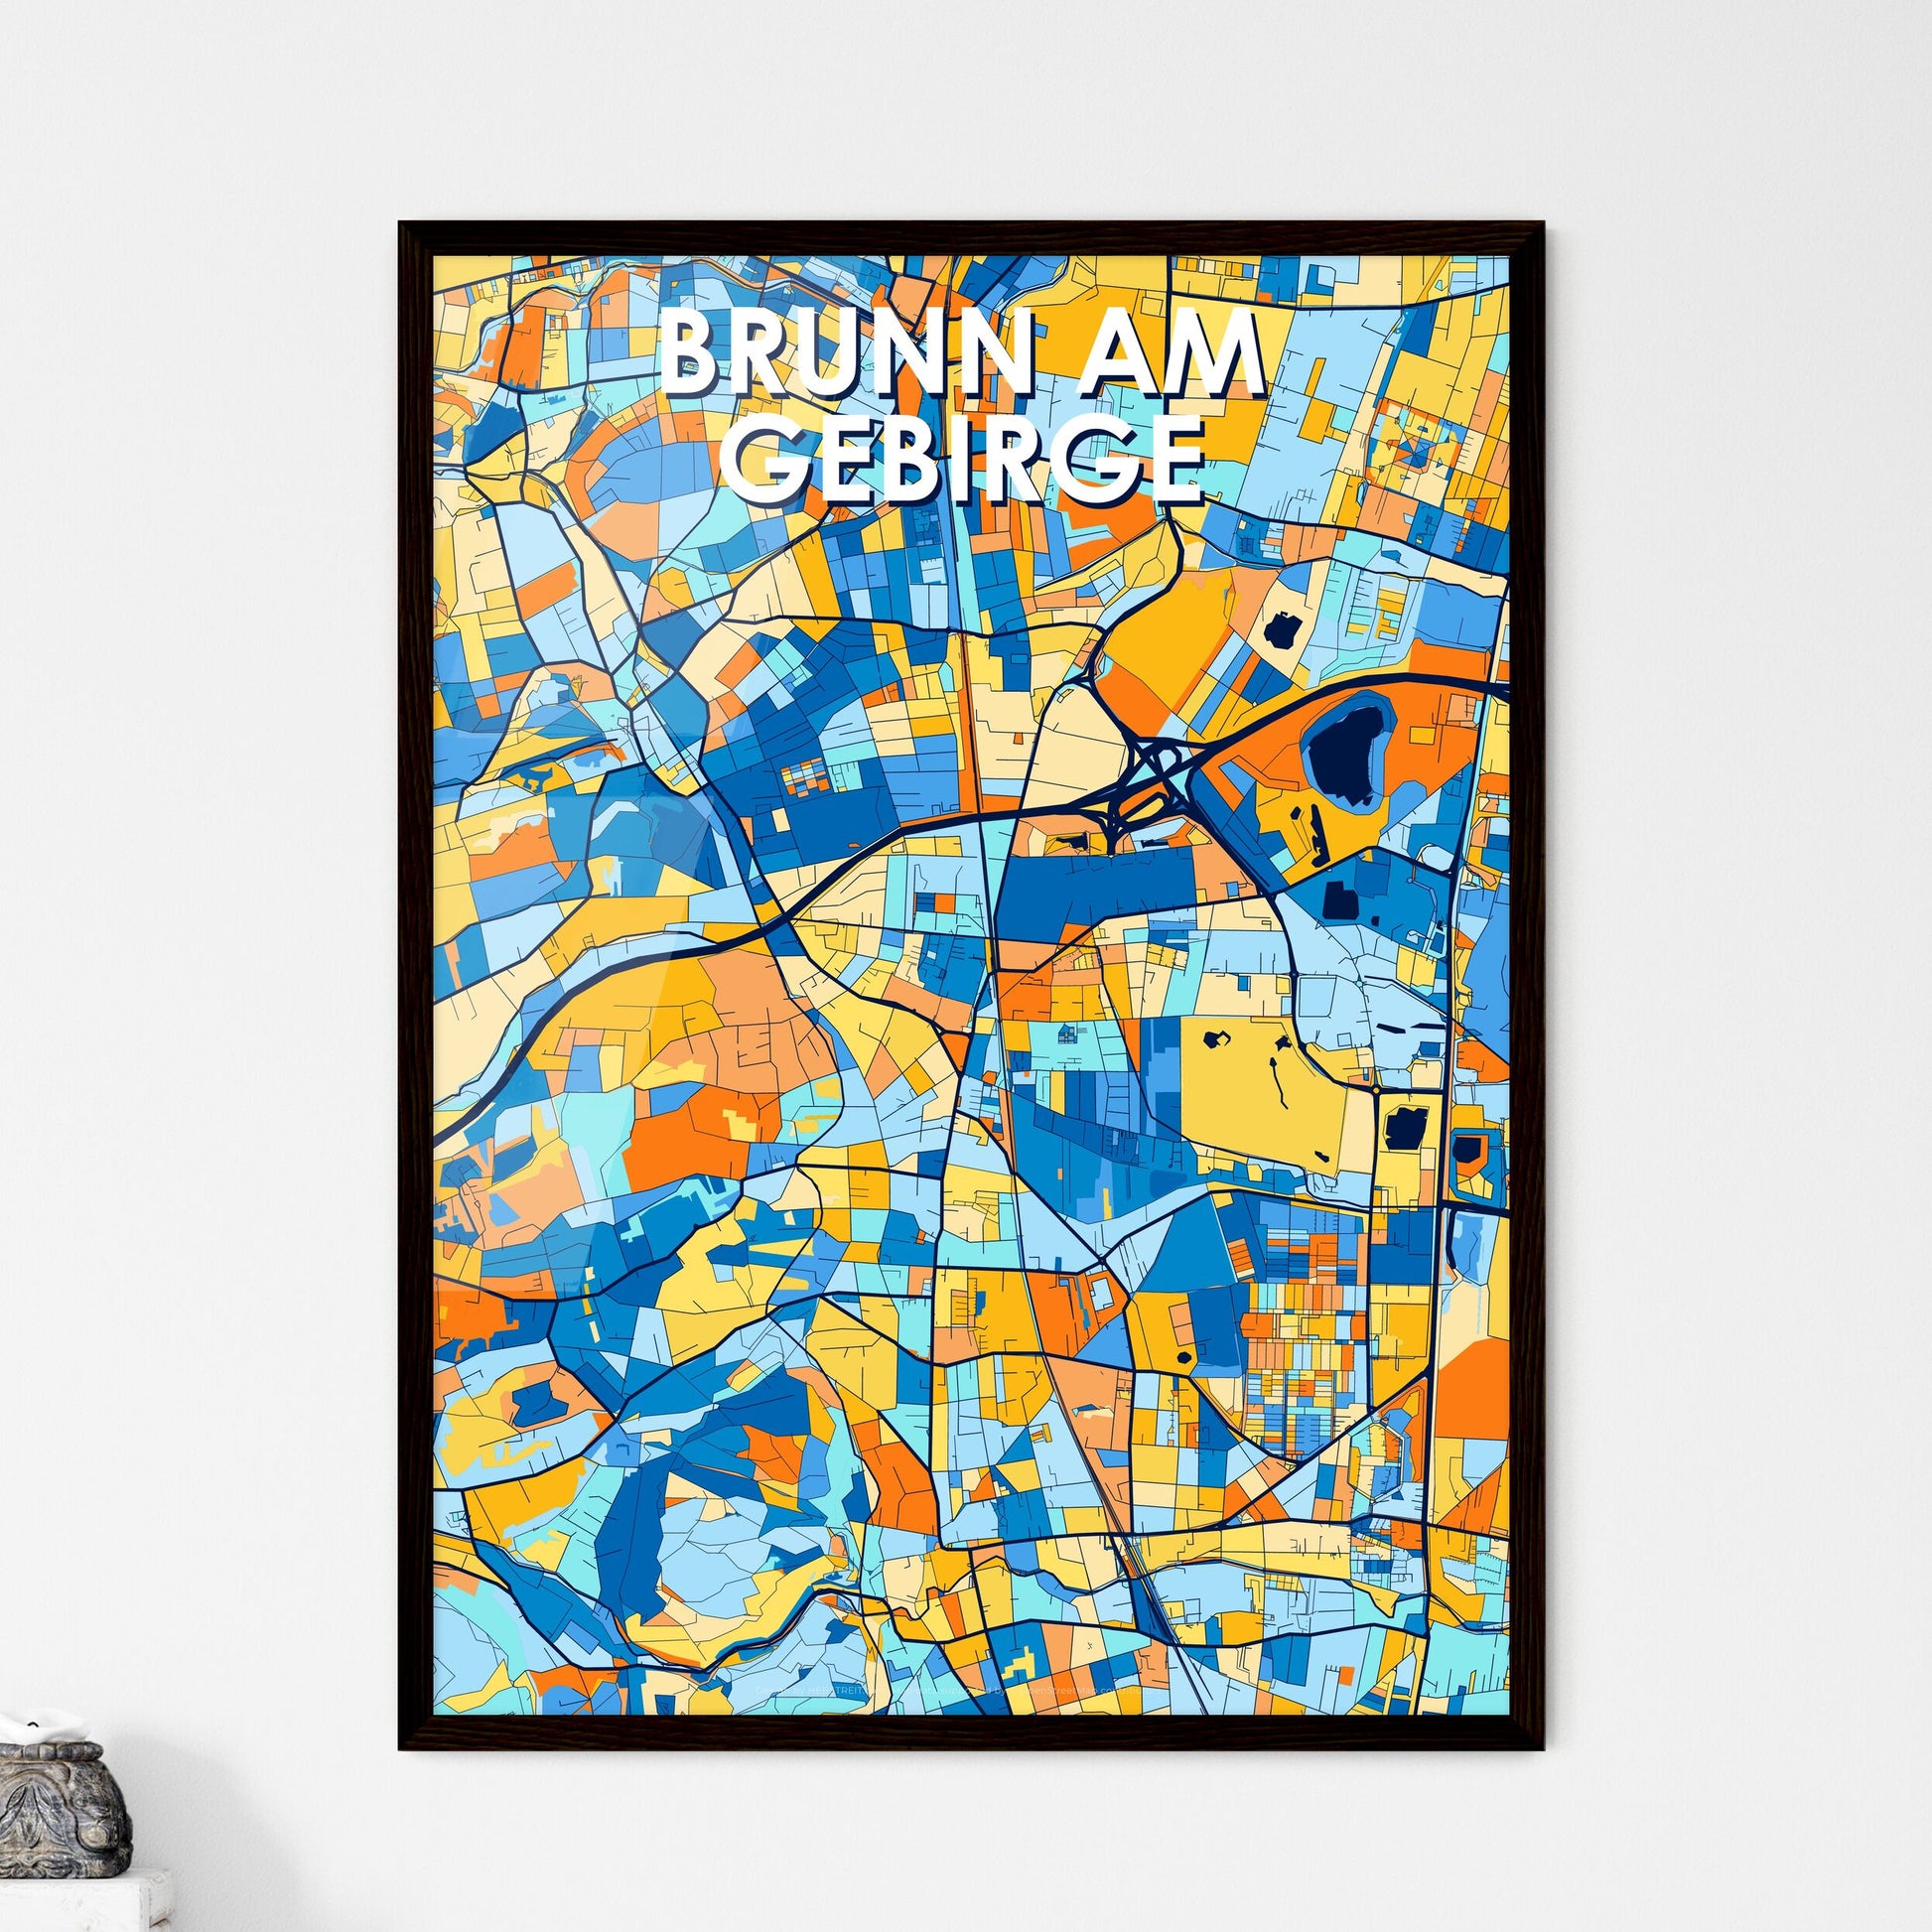 BRUNN AM GEBIRGE AUSTRIA Vibrant Colorful Art Map Poster Blue Orange